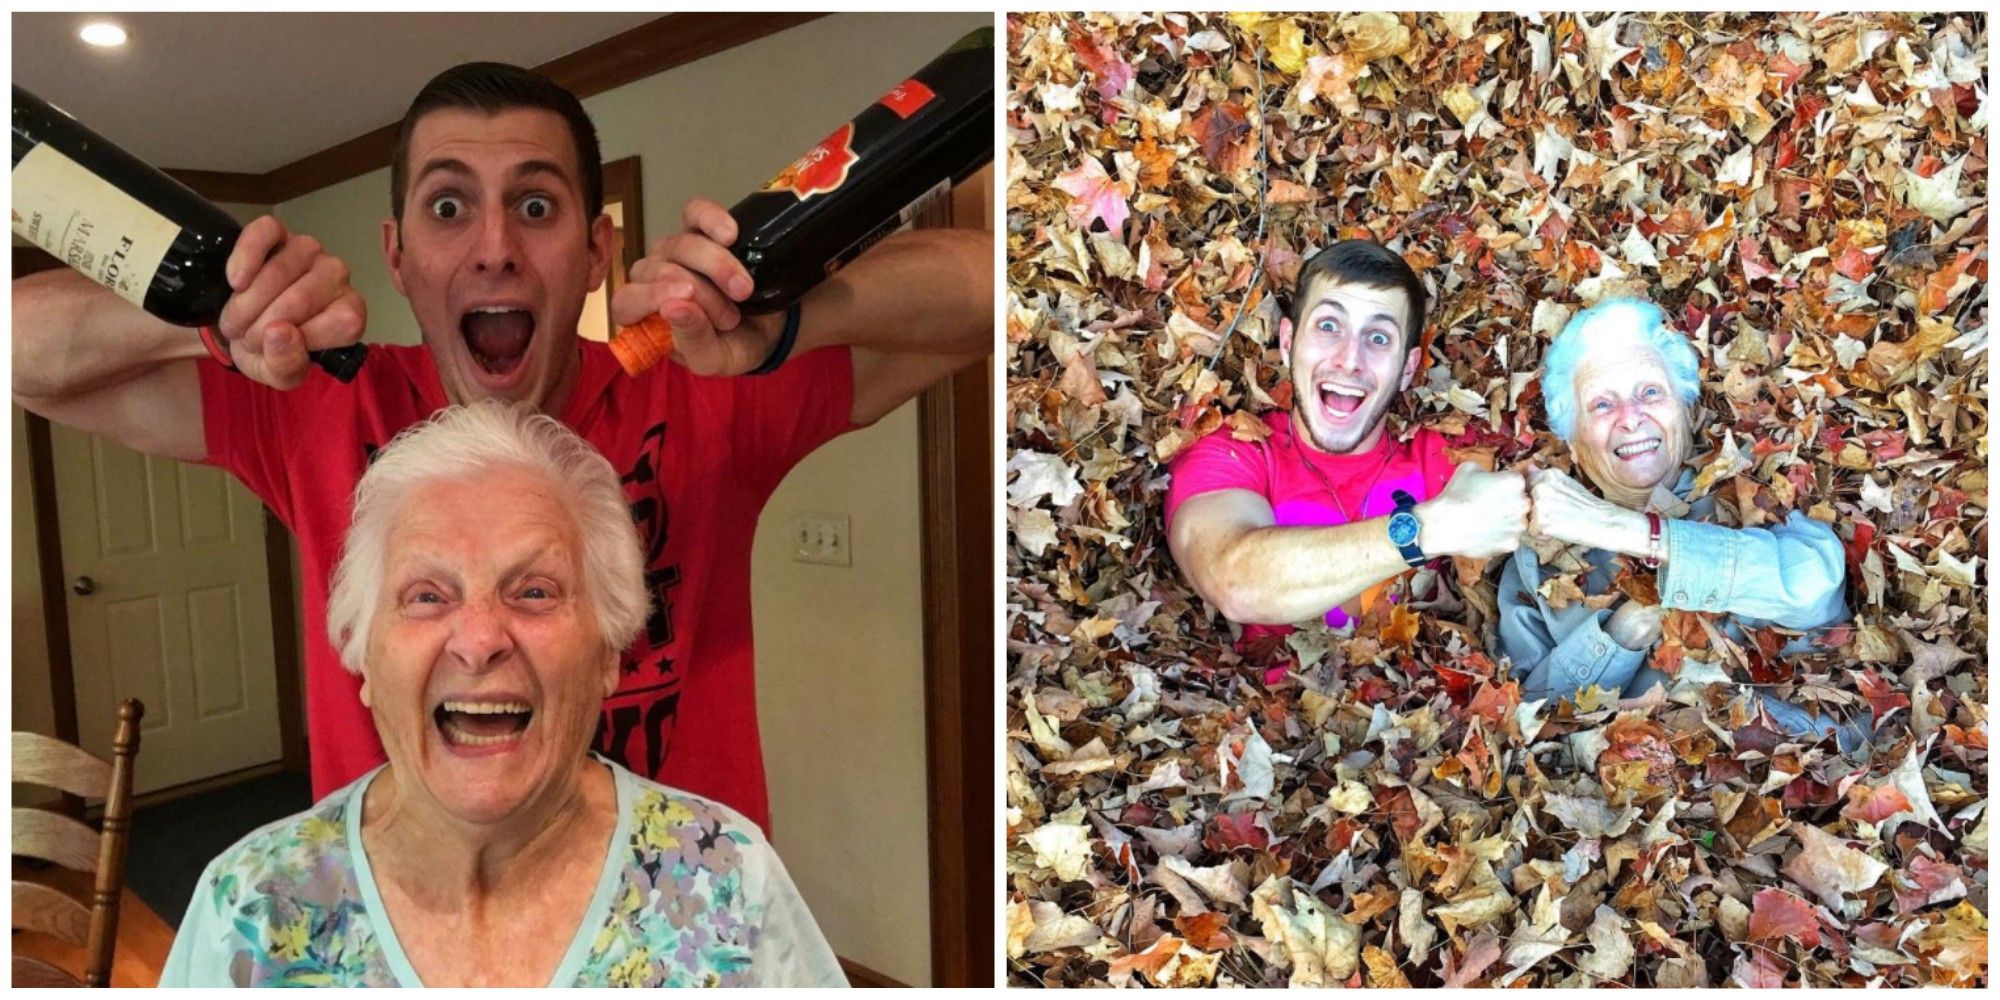 grandma and grandson pranks.